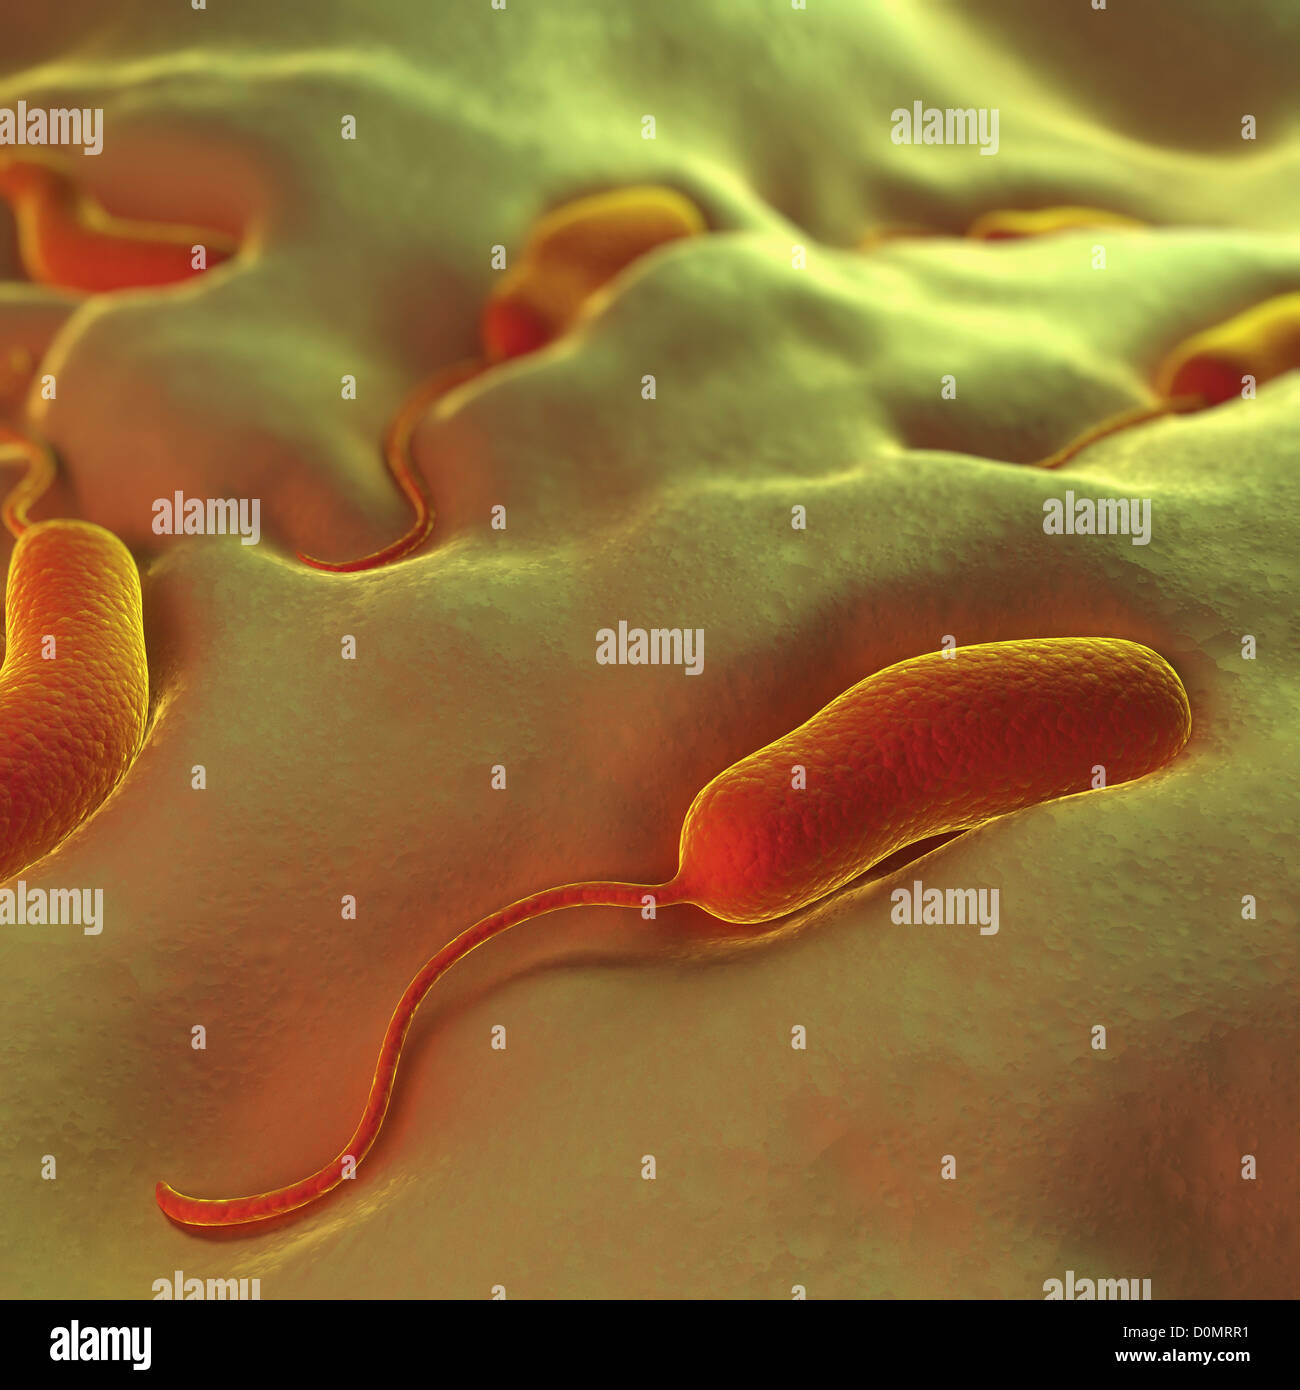 Group of vibrio cholerae bacteria which causes cholera. Stock Photo